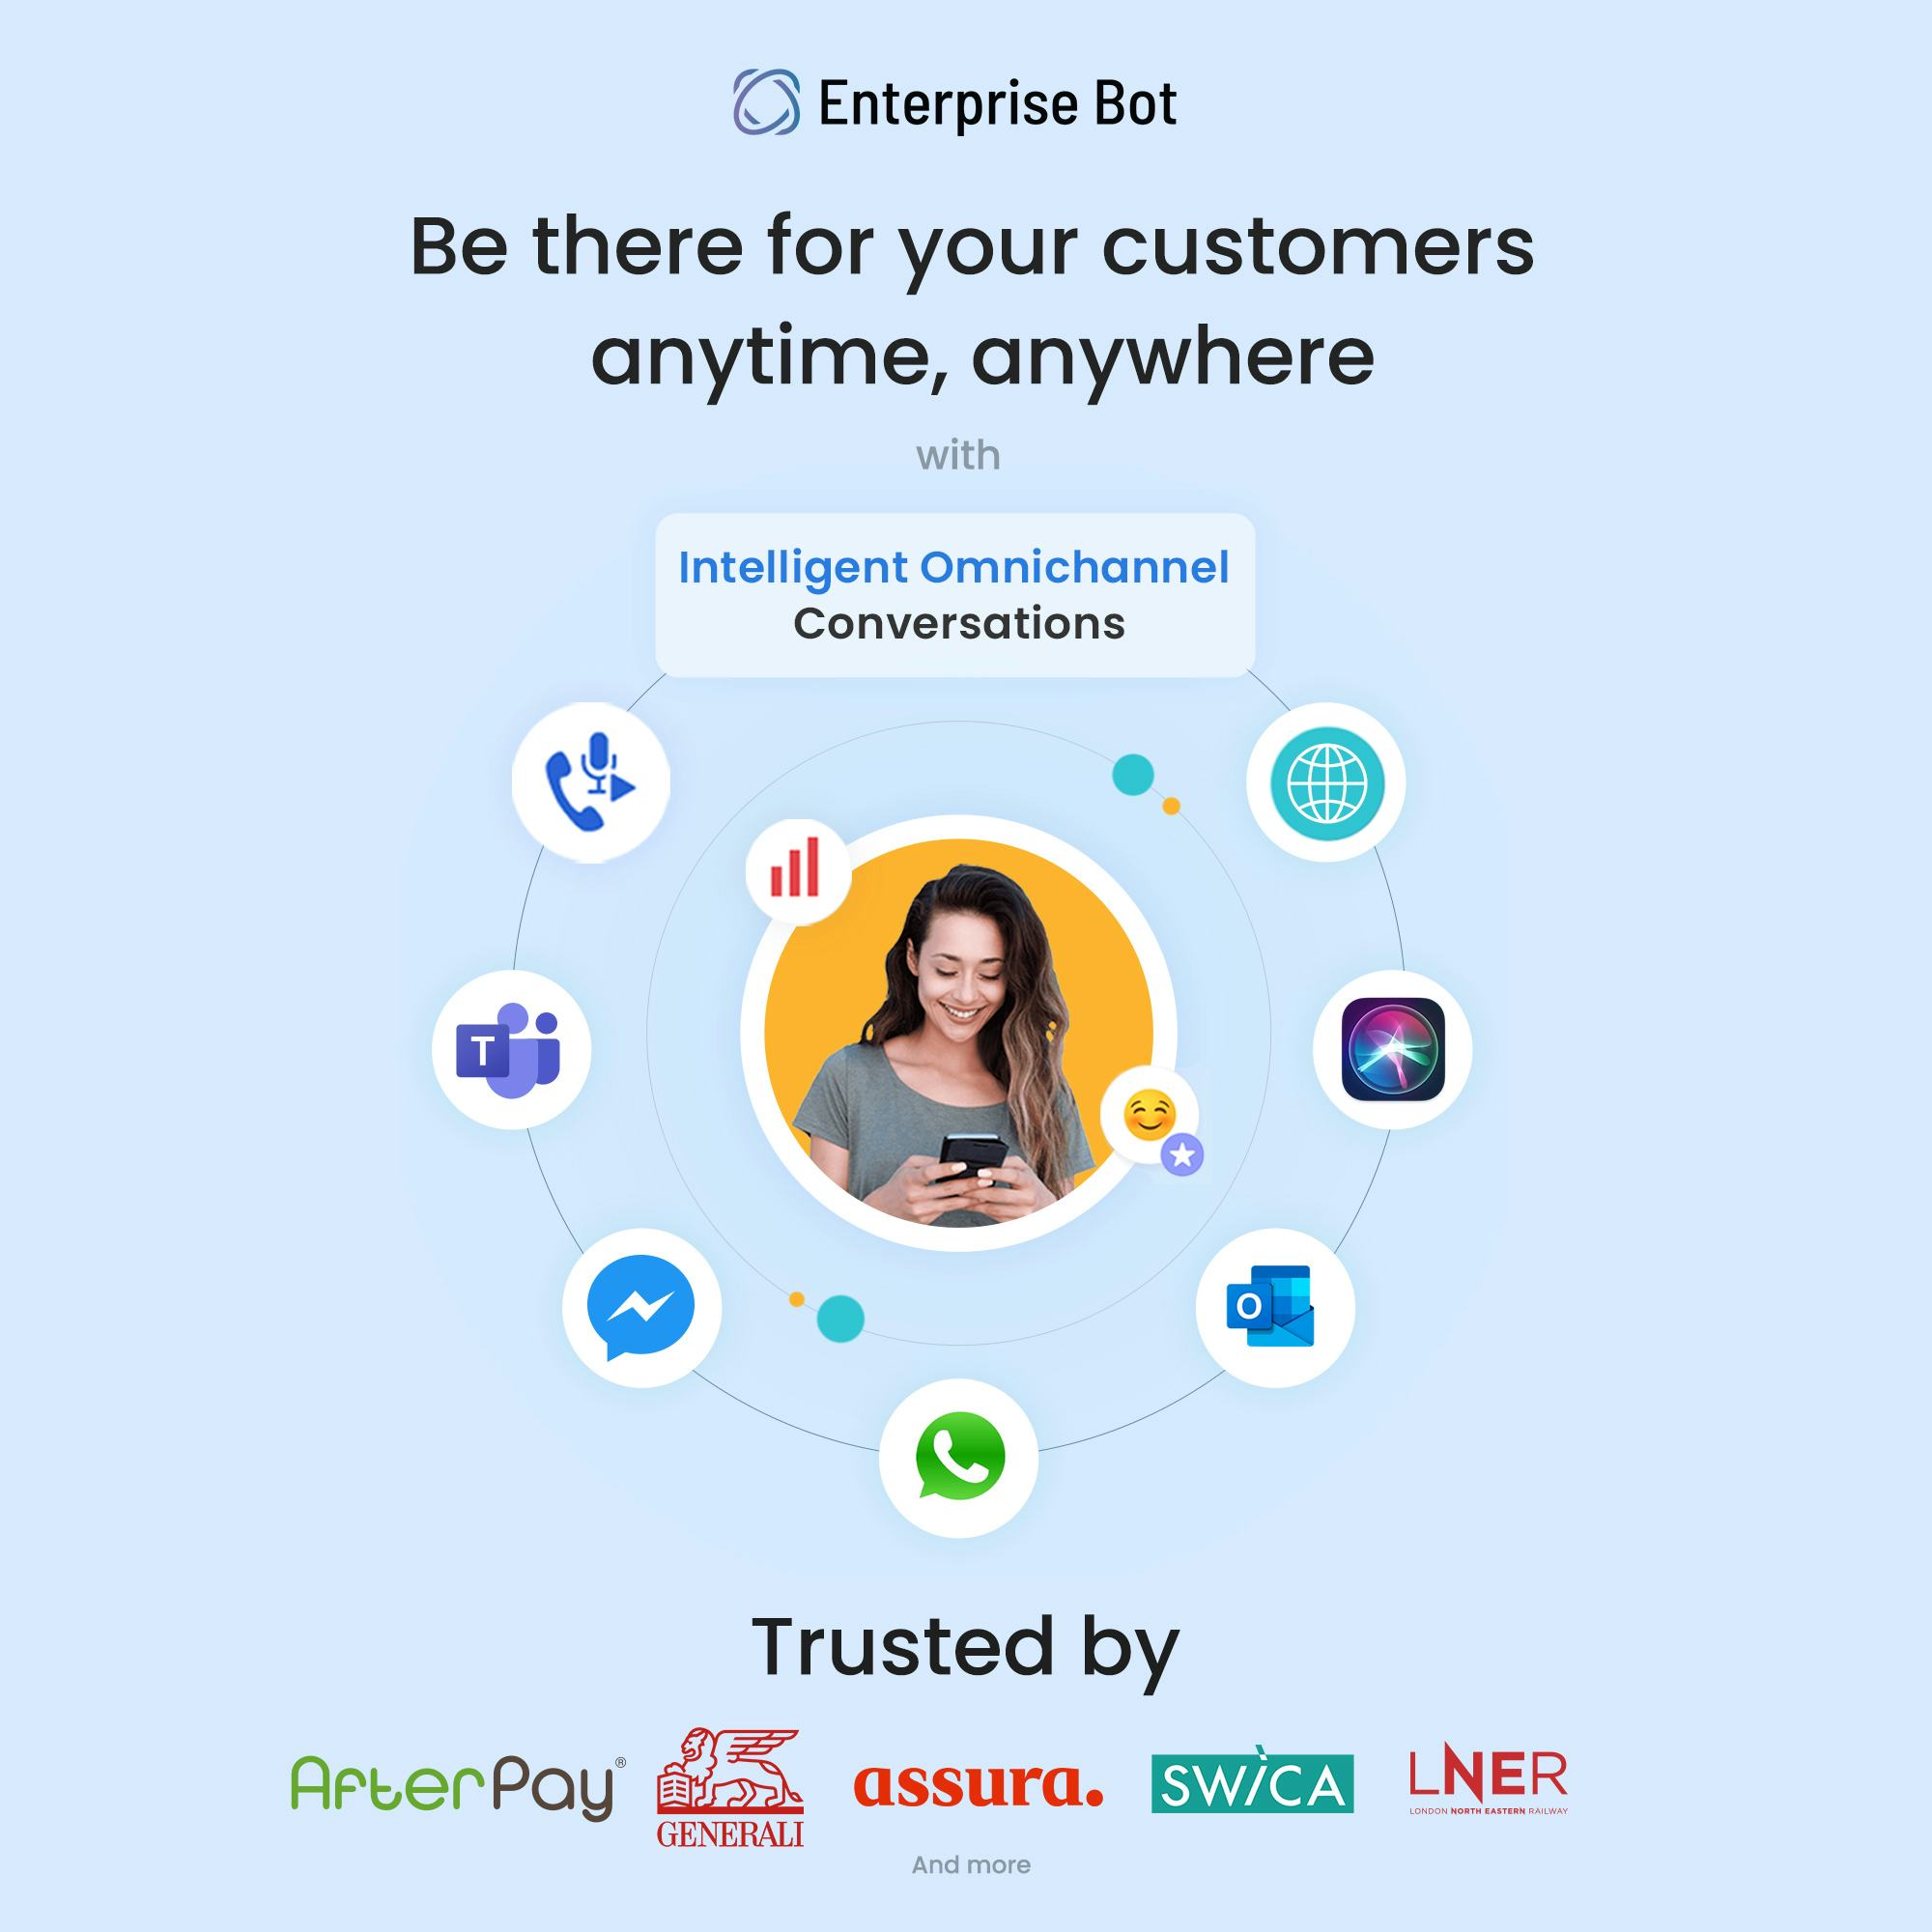 Enterprise Bot Software - Intelligent Omnichannel Conversations for enhanced customer experience